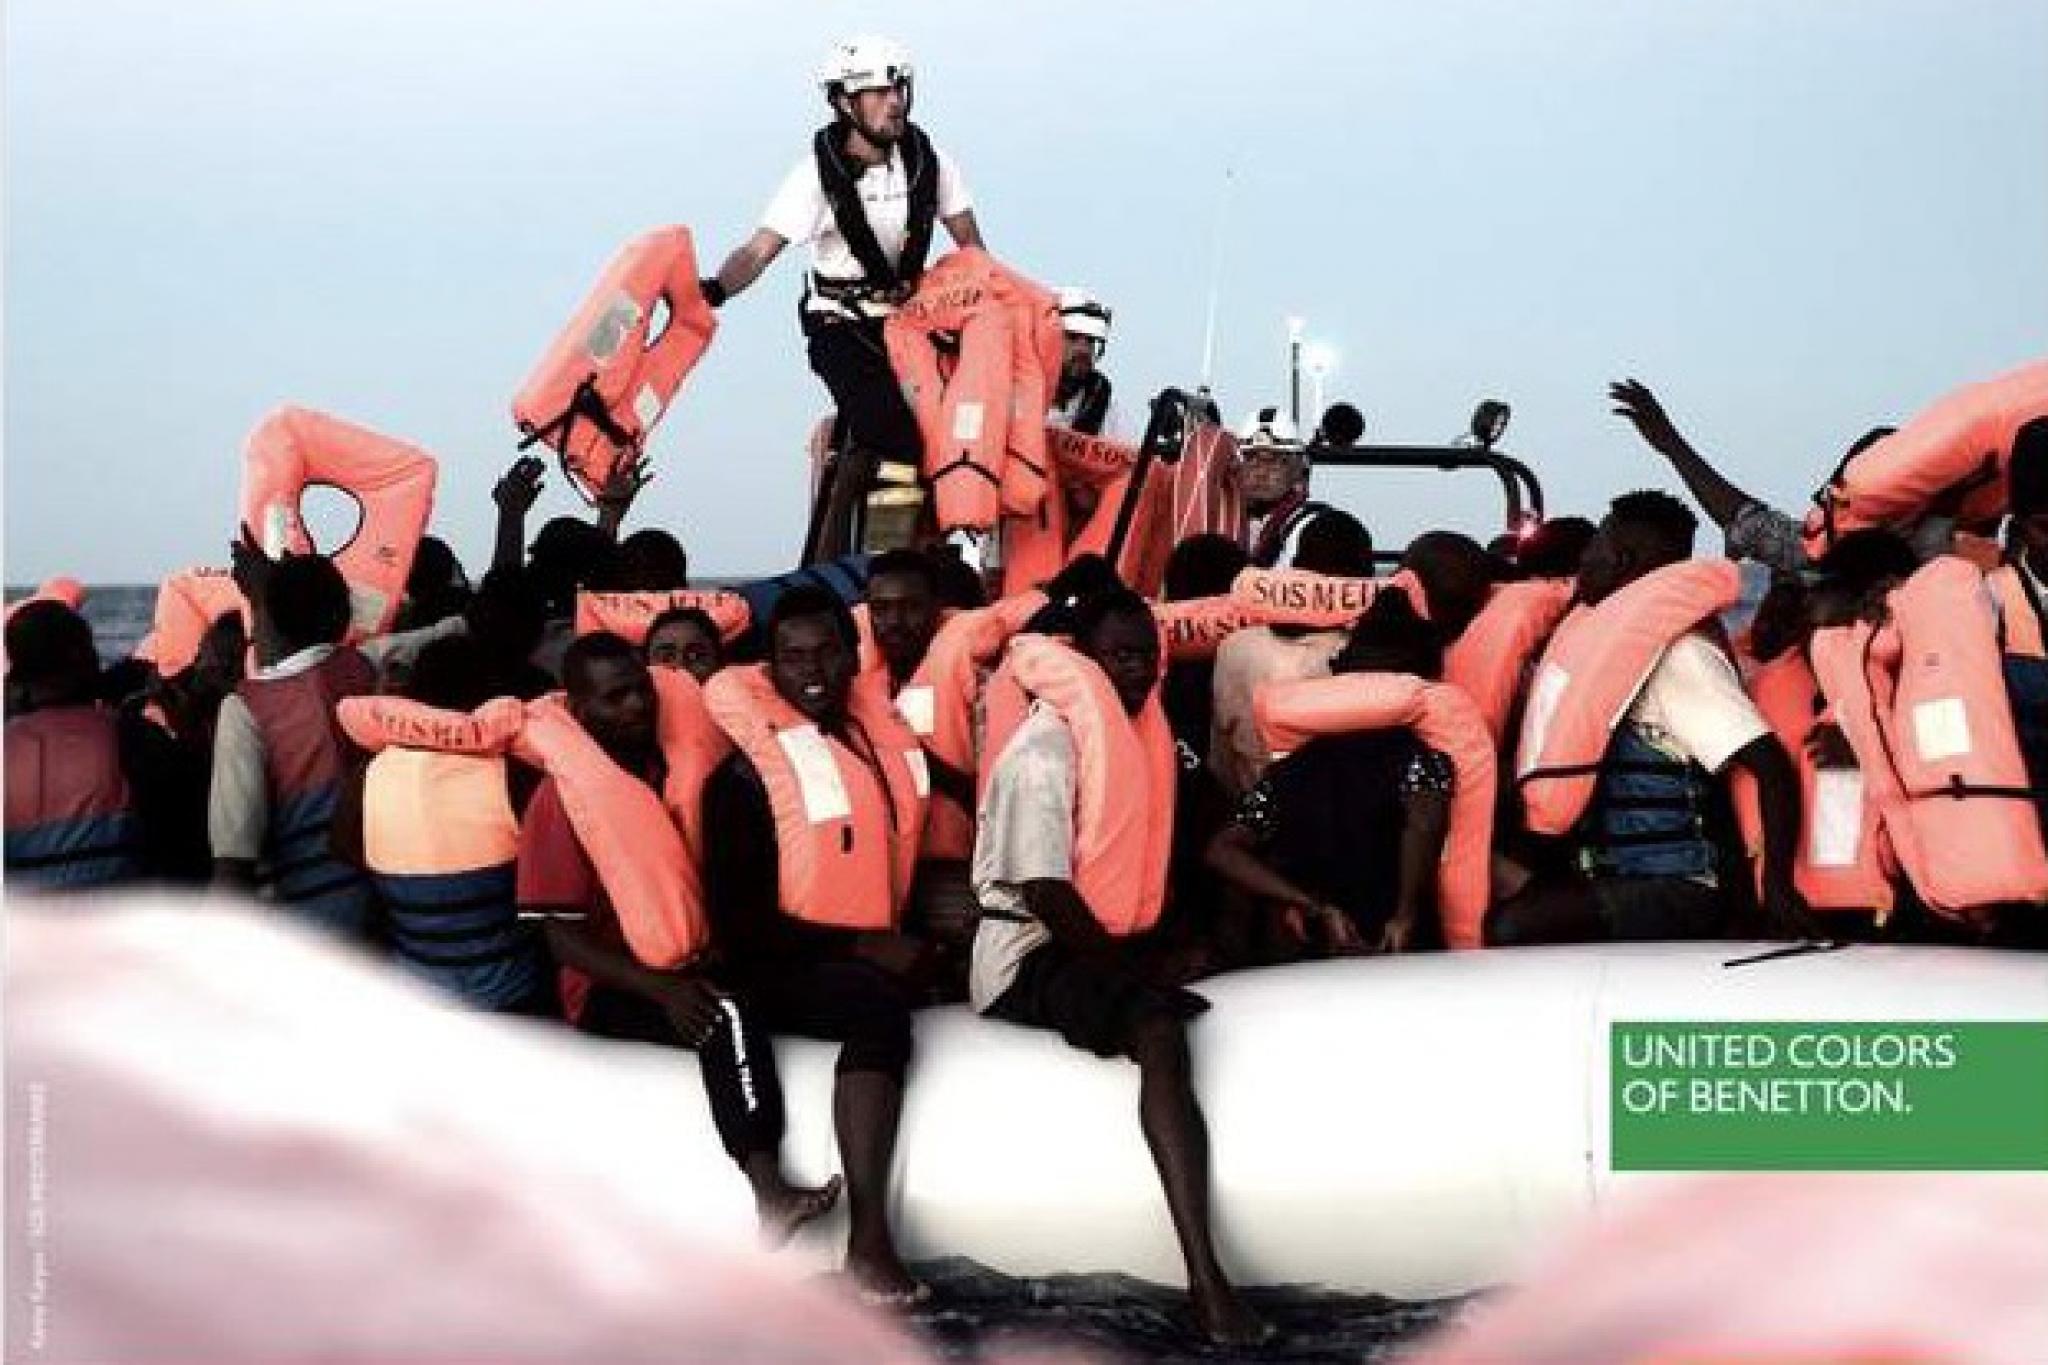 Photos refugees advertise Benetton